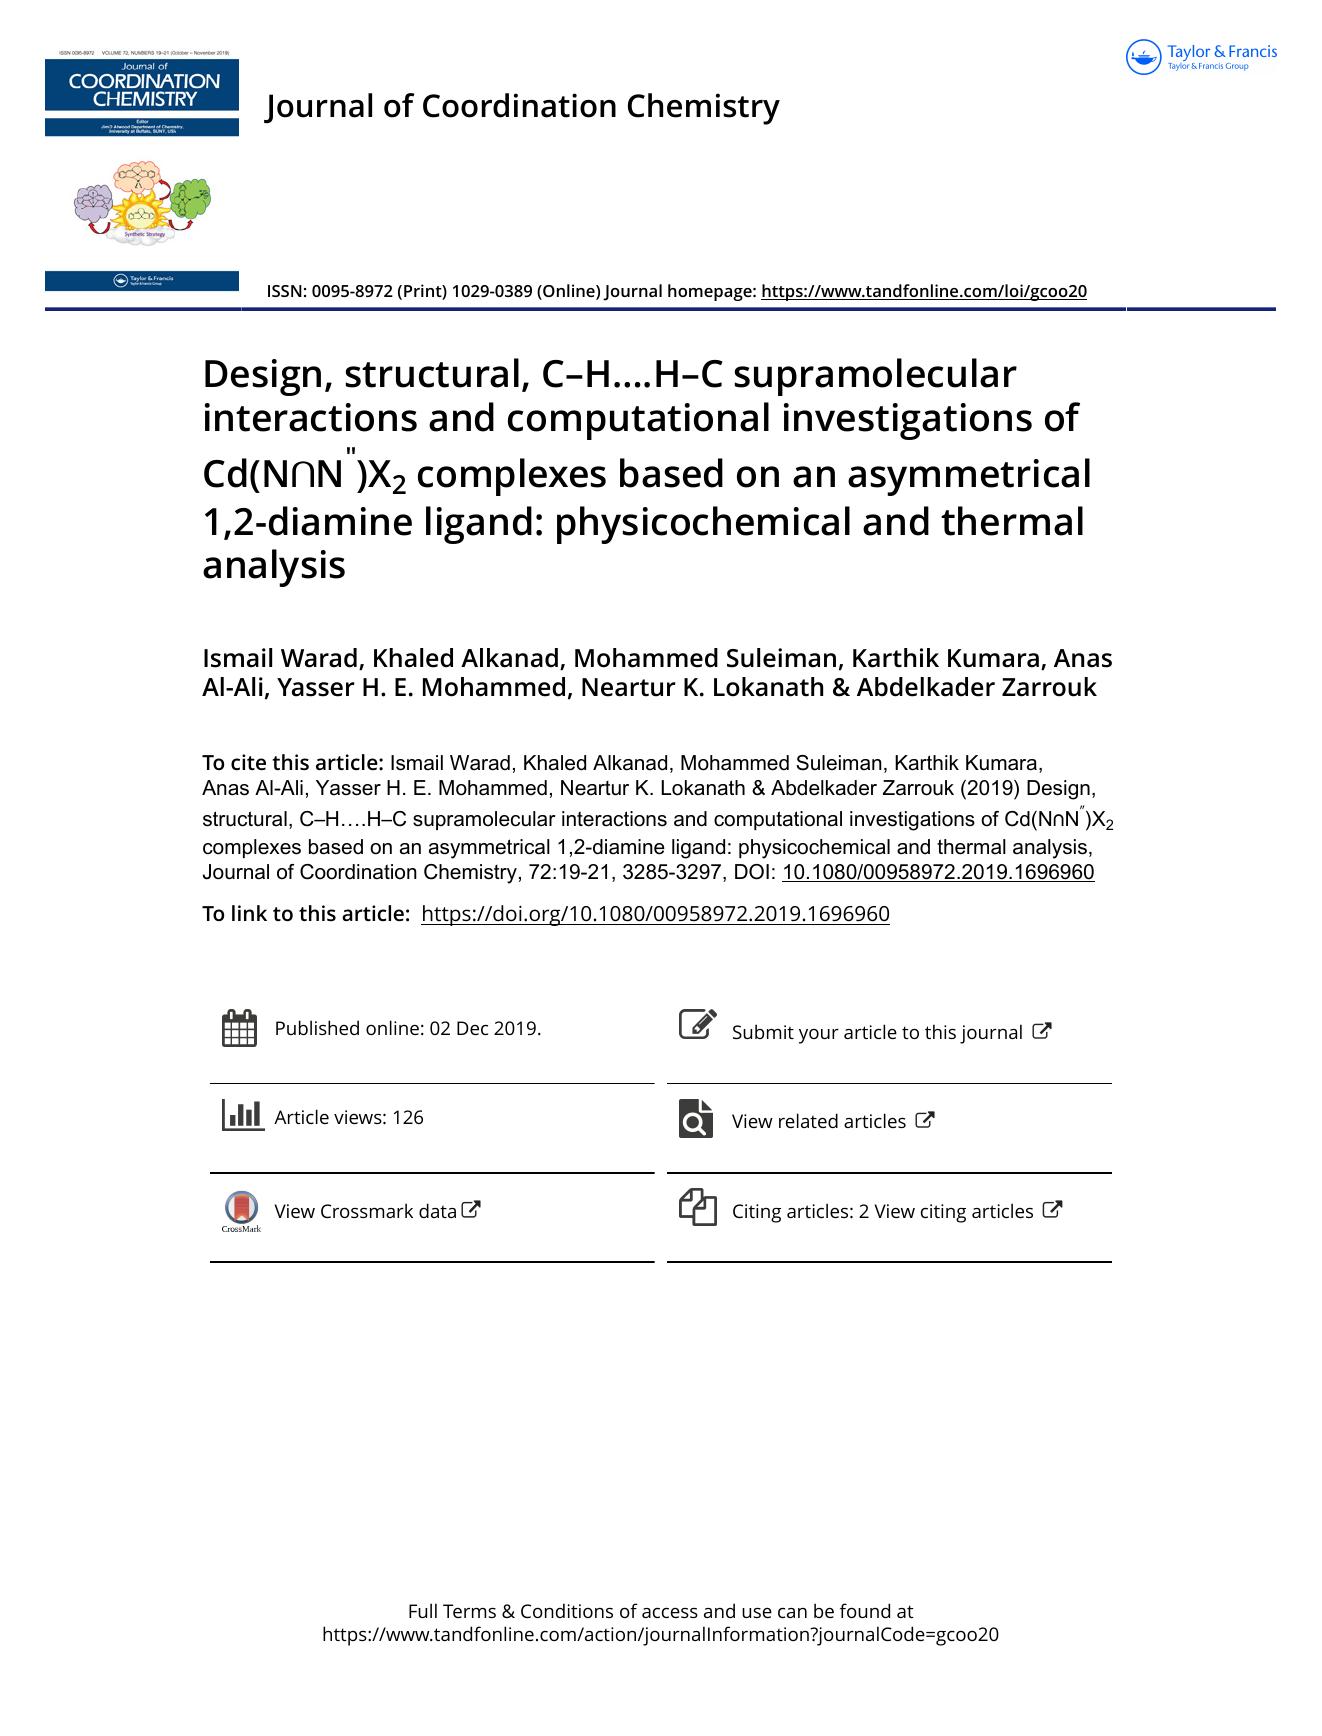 Design, structural, CâHâ¦.HâC supramolecular interactions and computational investigations of Cd(Nâ©Nâ³)X2 complexes based on an asymmetrical 1,2-diamine ligand: physicochem by unknow